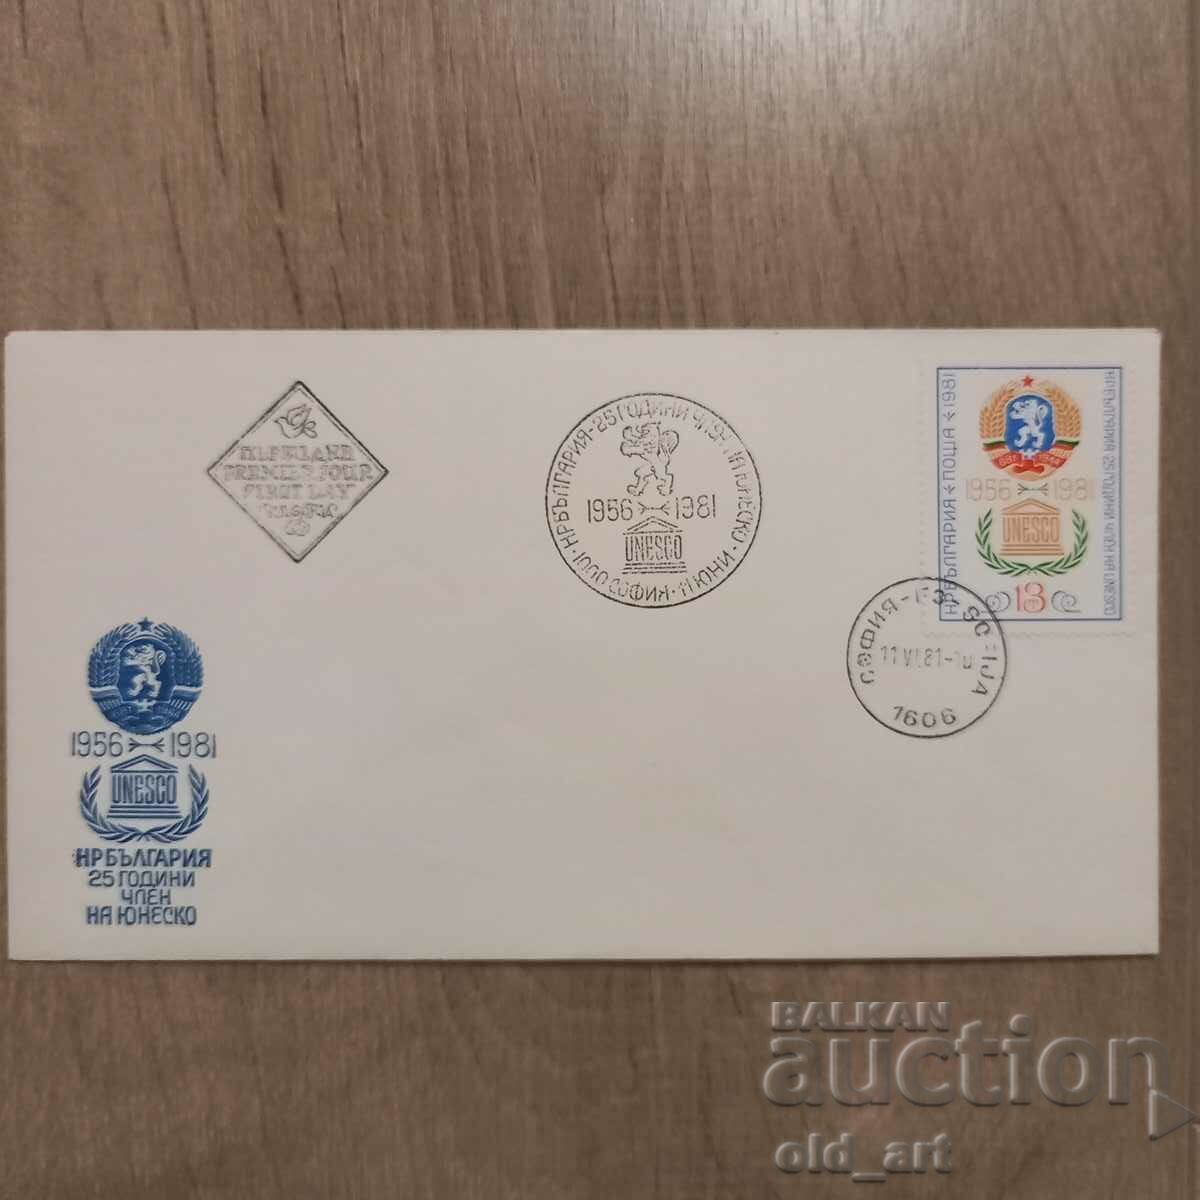 Postal envelope - Bulgaria 25 years a member of UNESCO